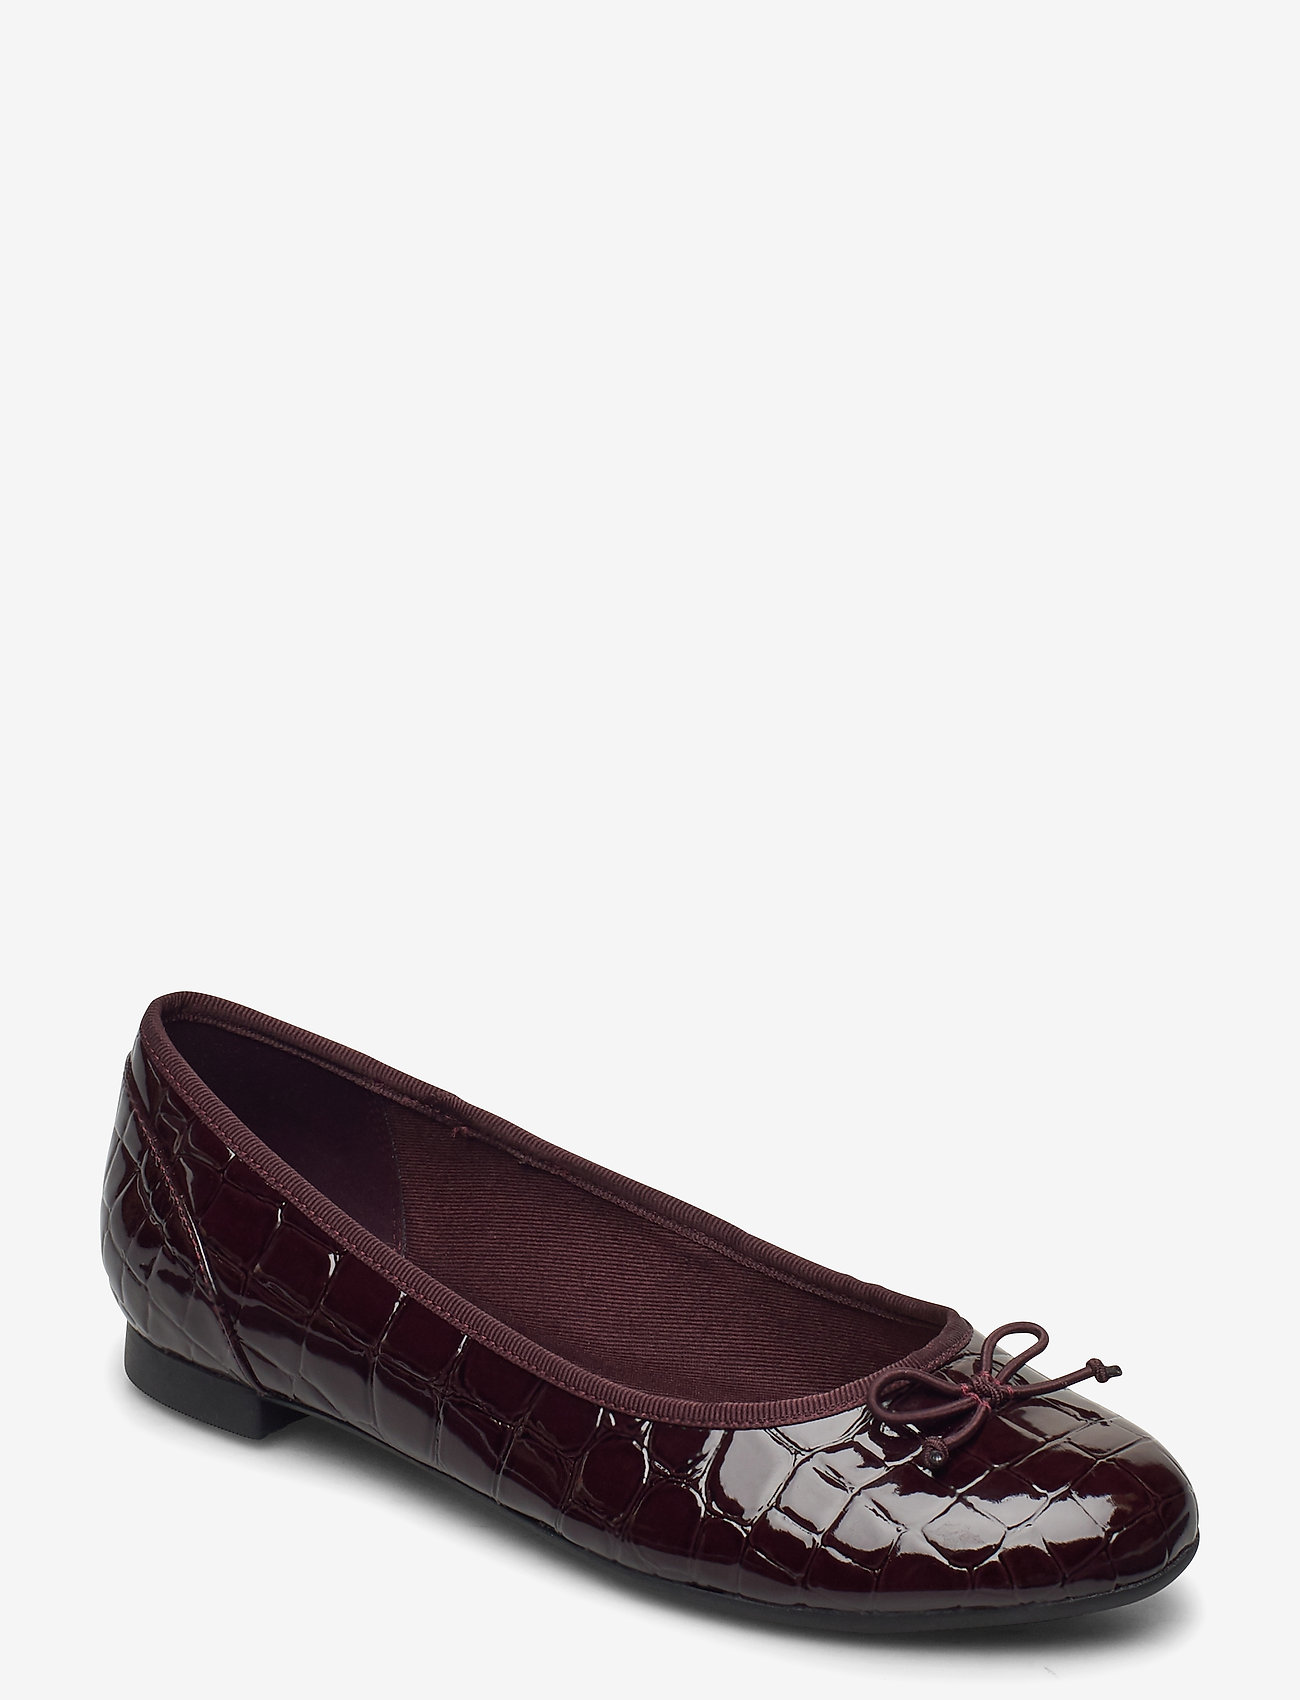 burgundy clarks shoes